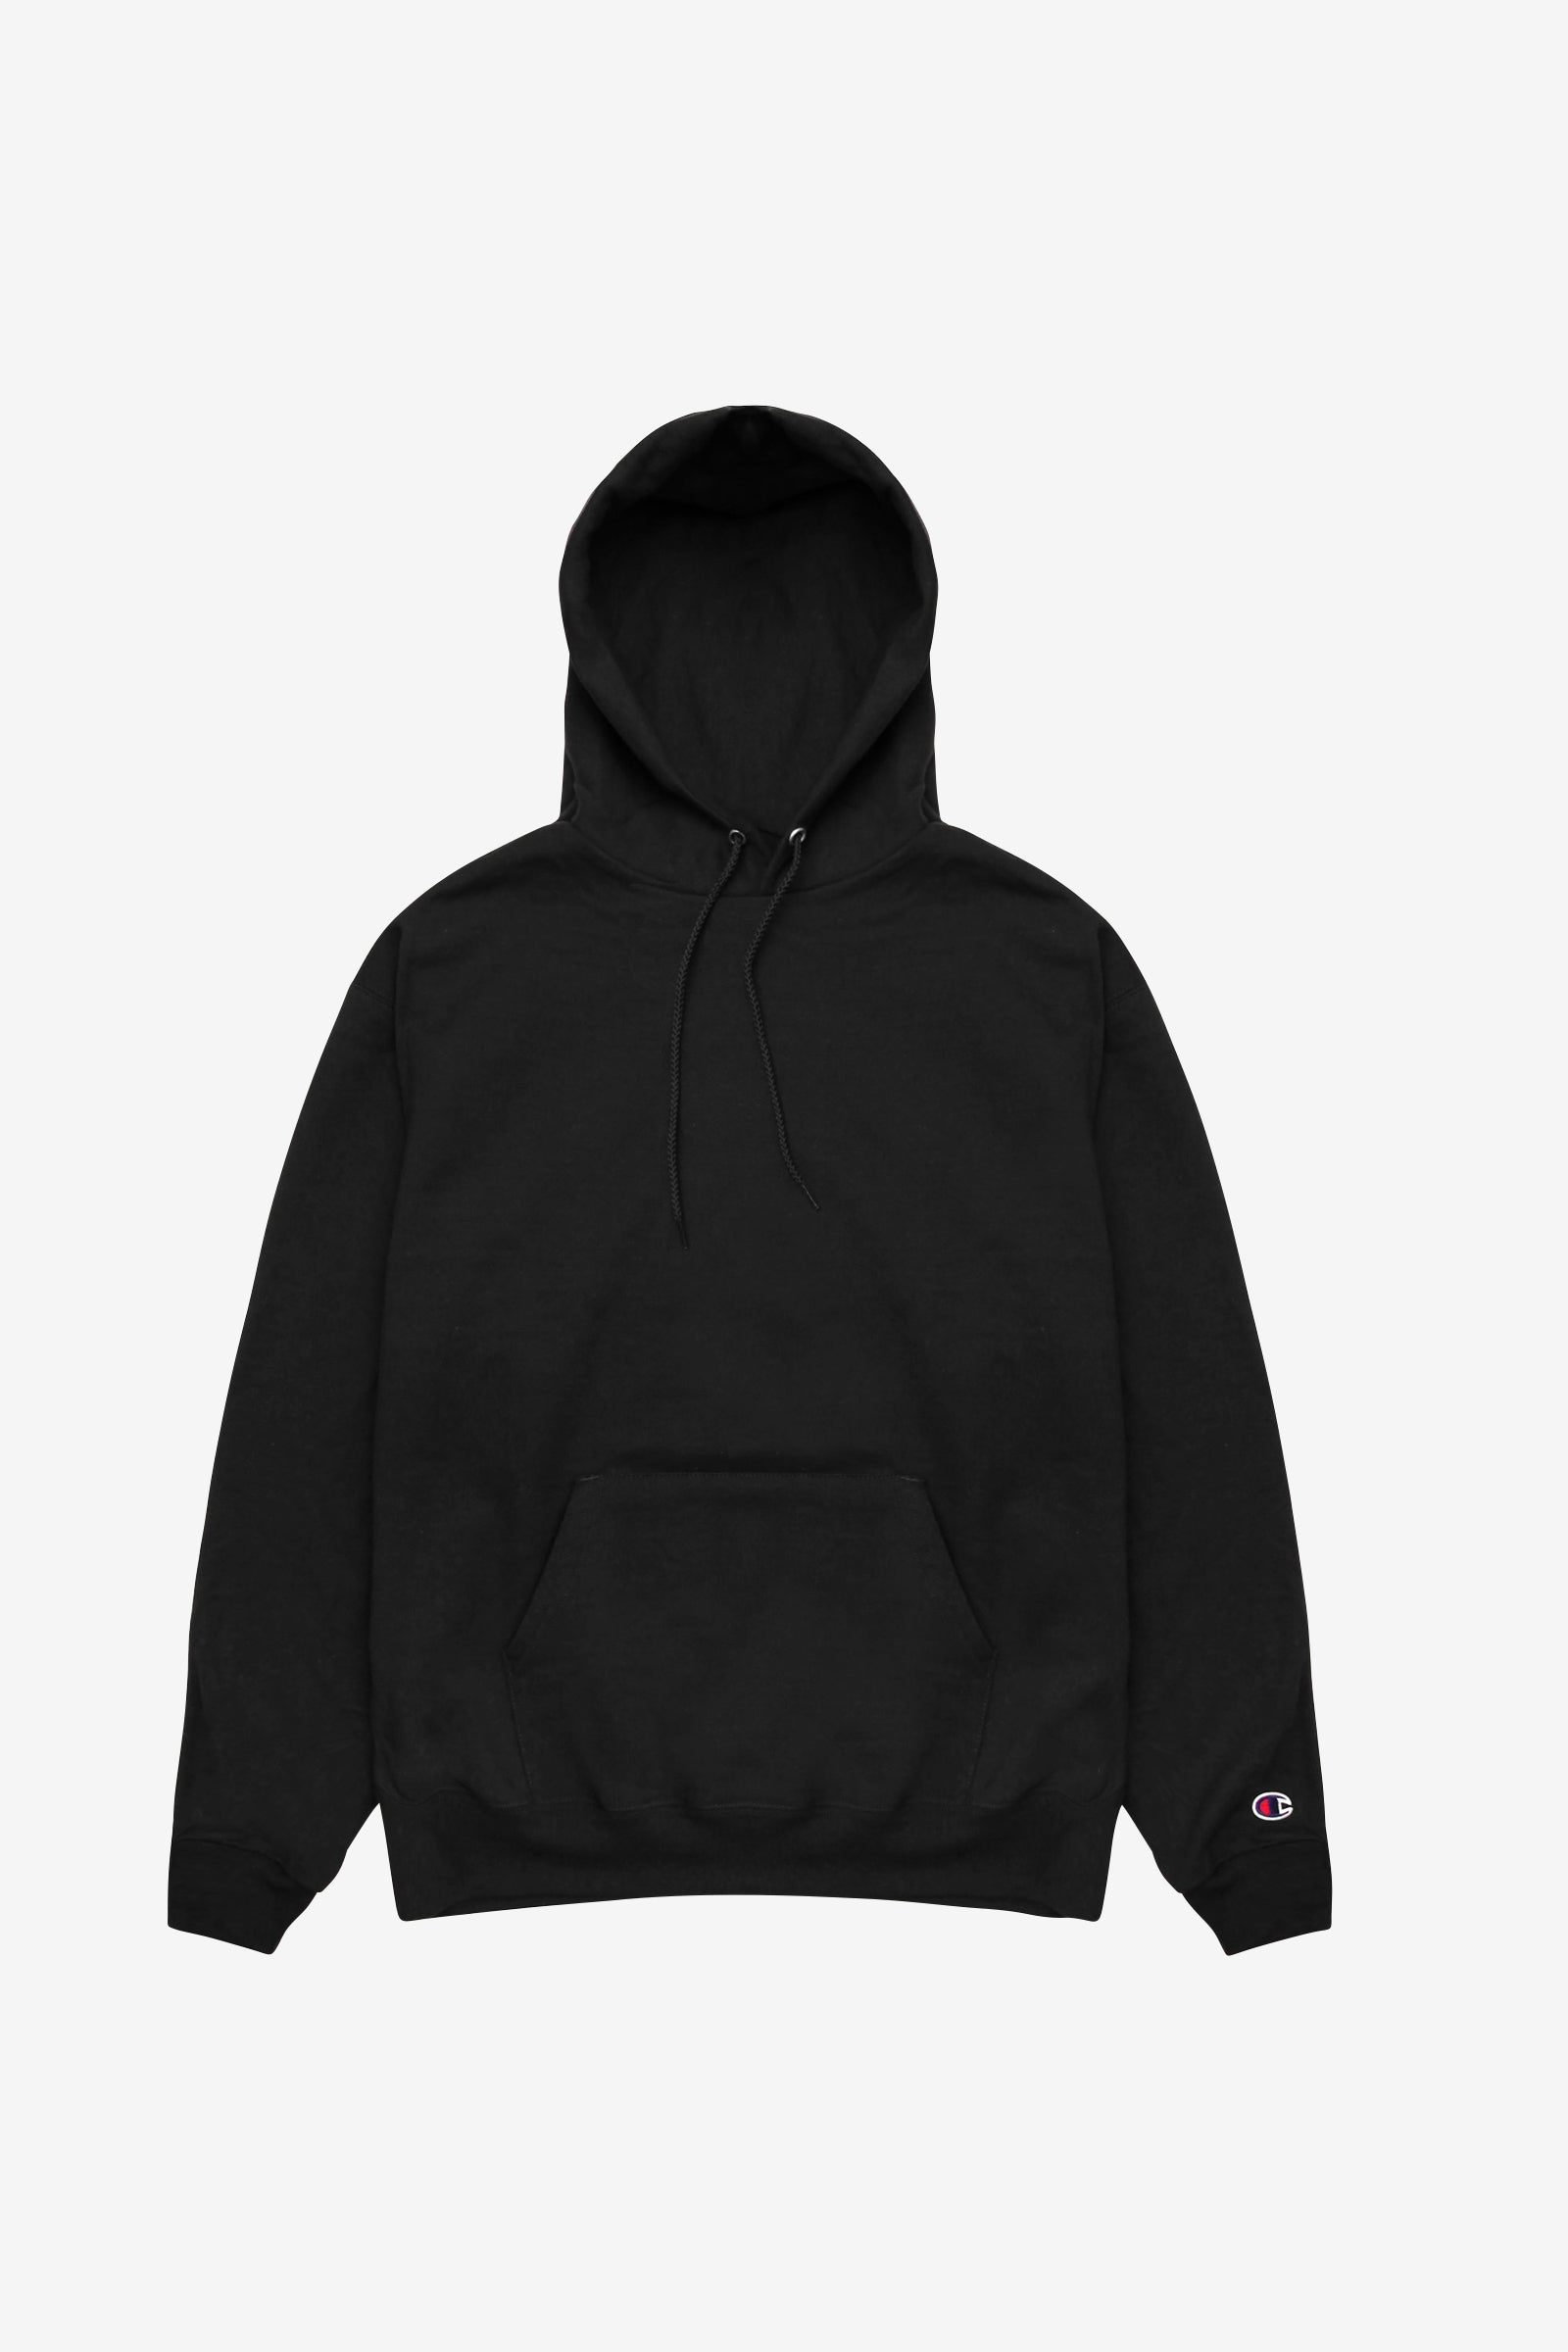 cheap black champion hoodie